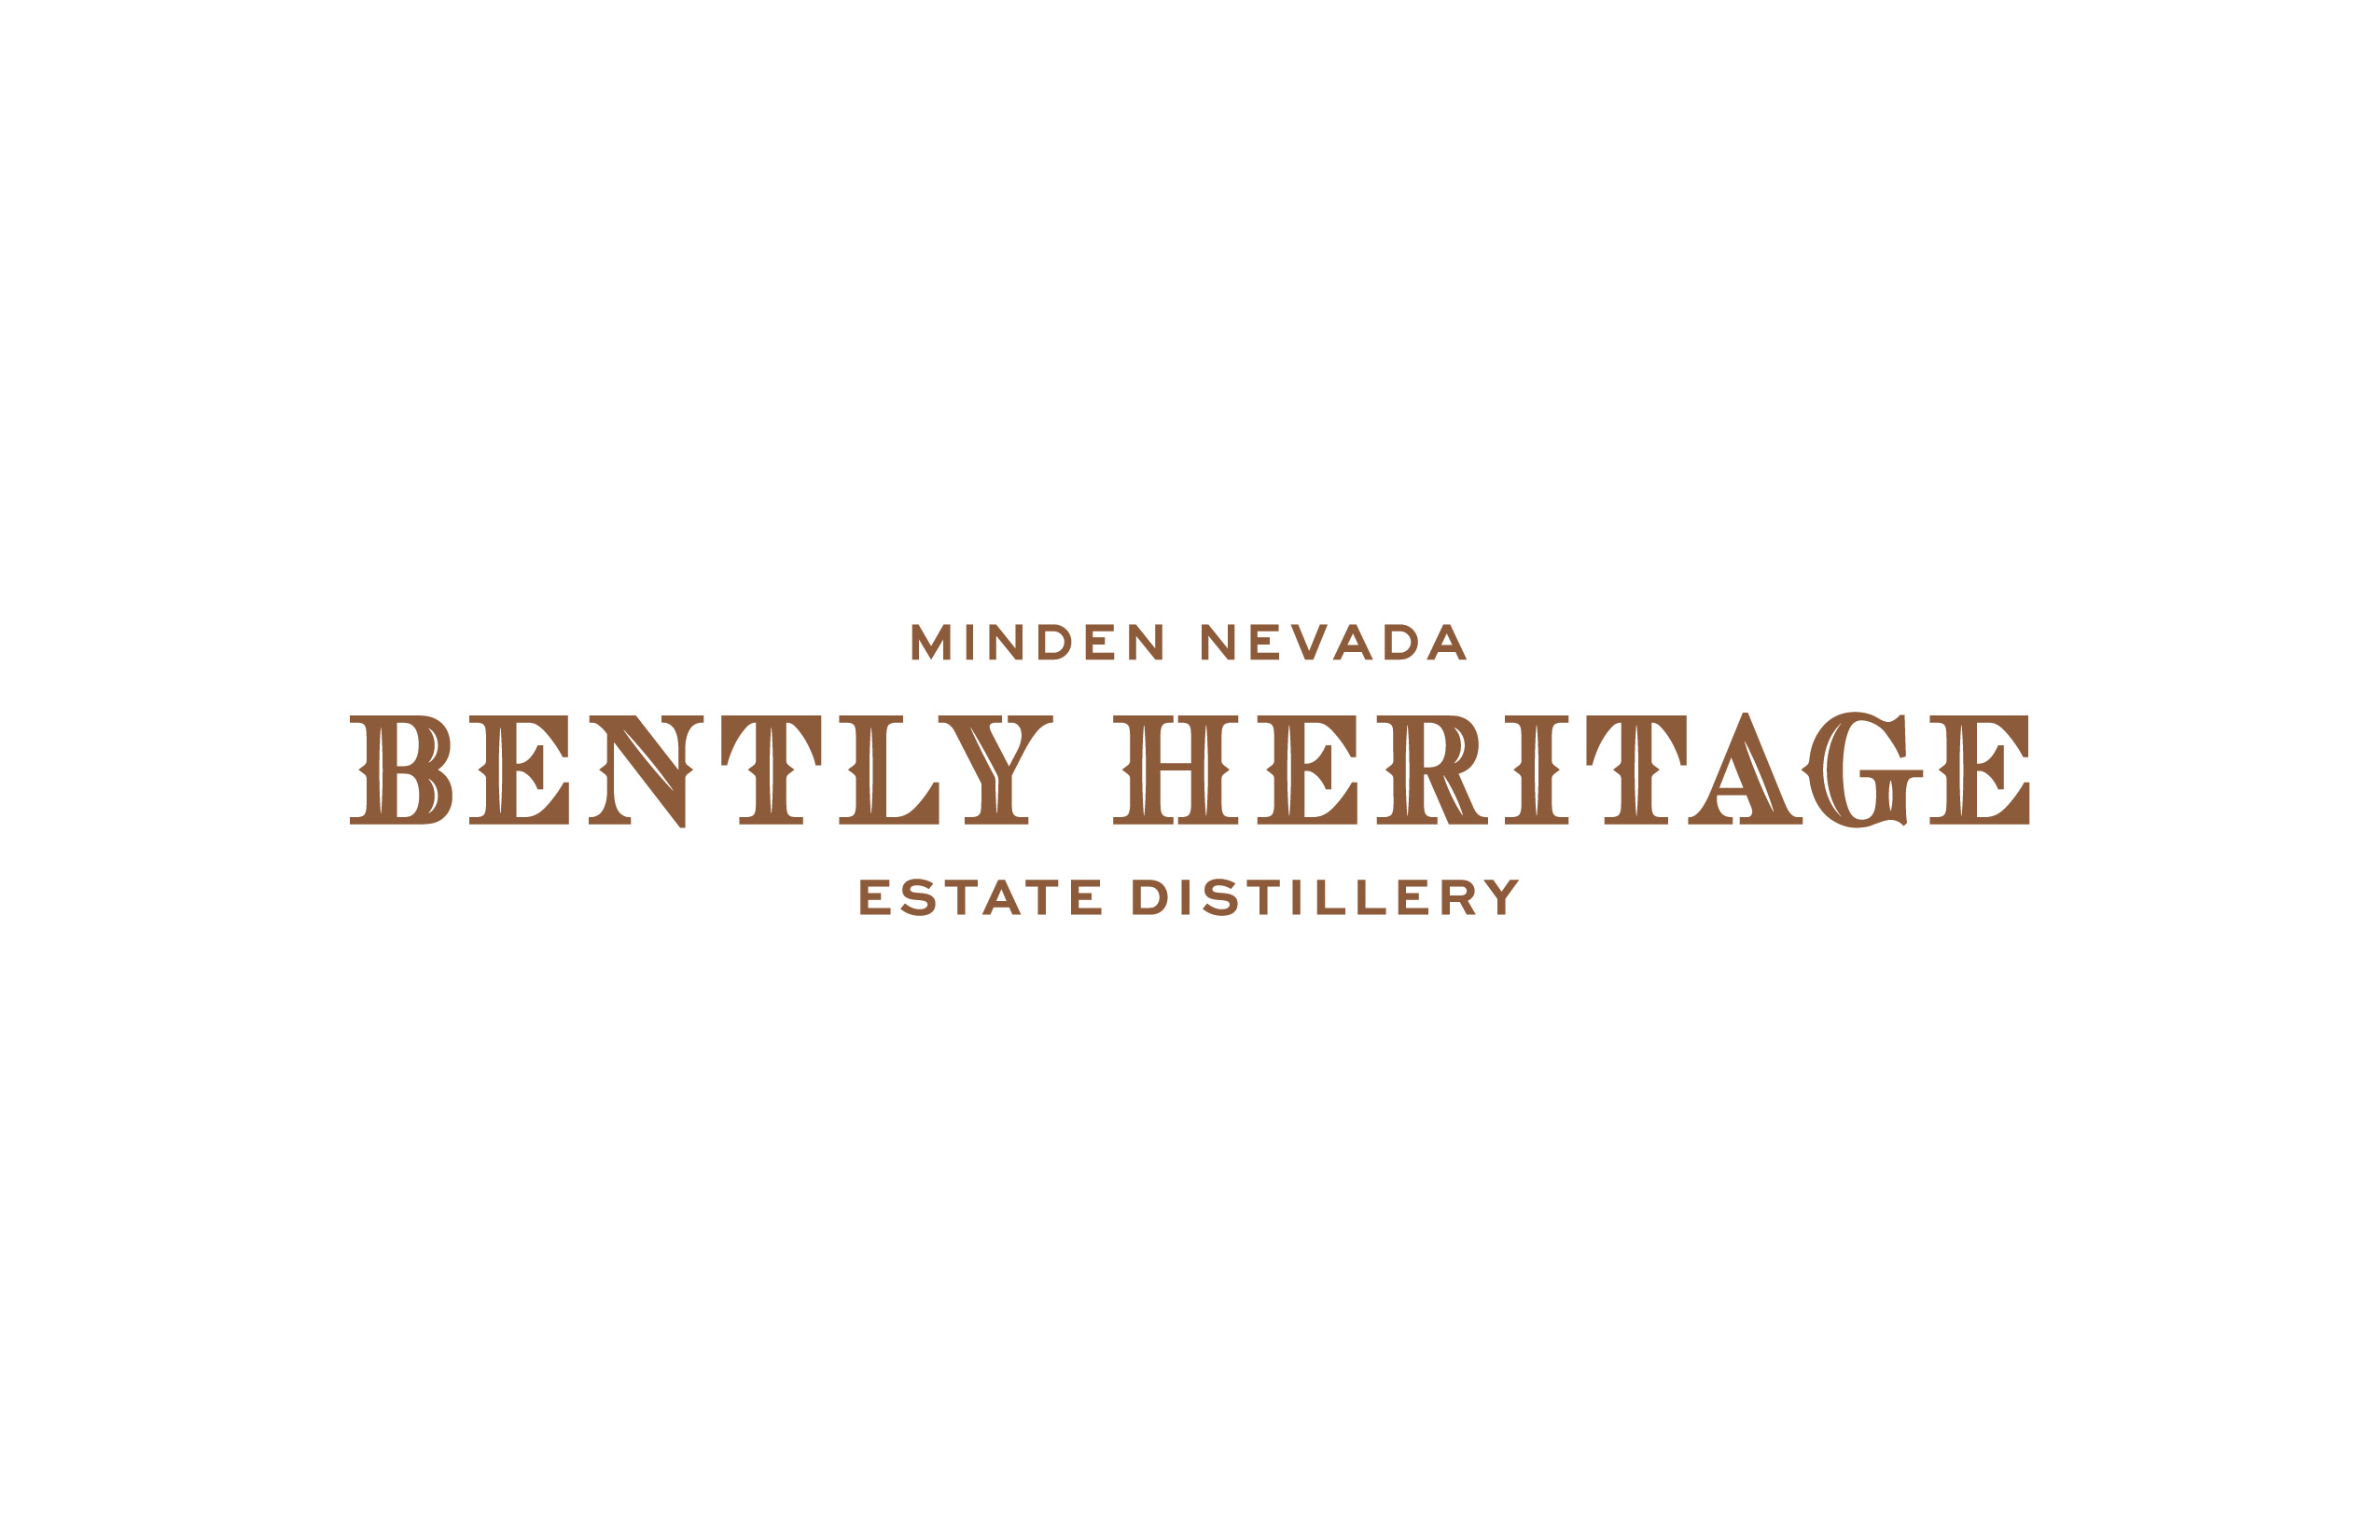 Bently Heritage Estate Distillery